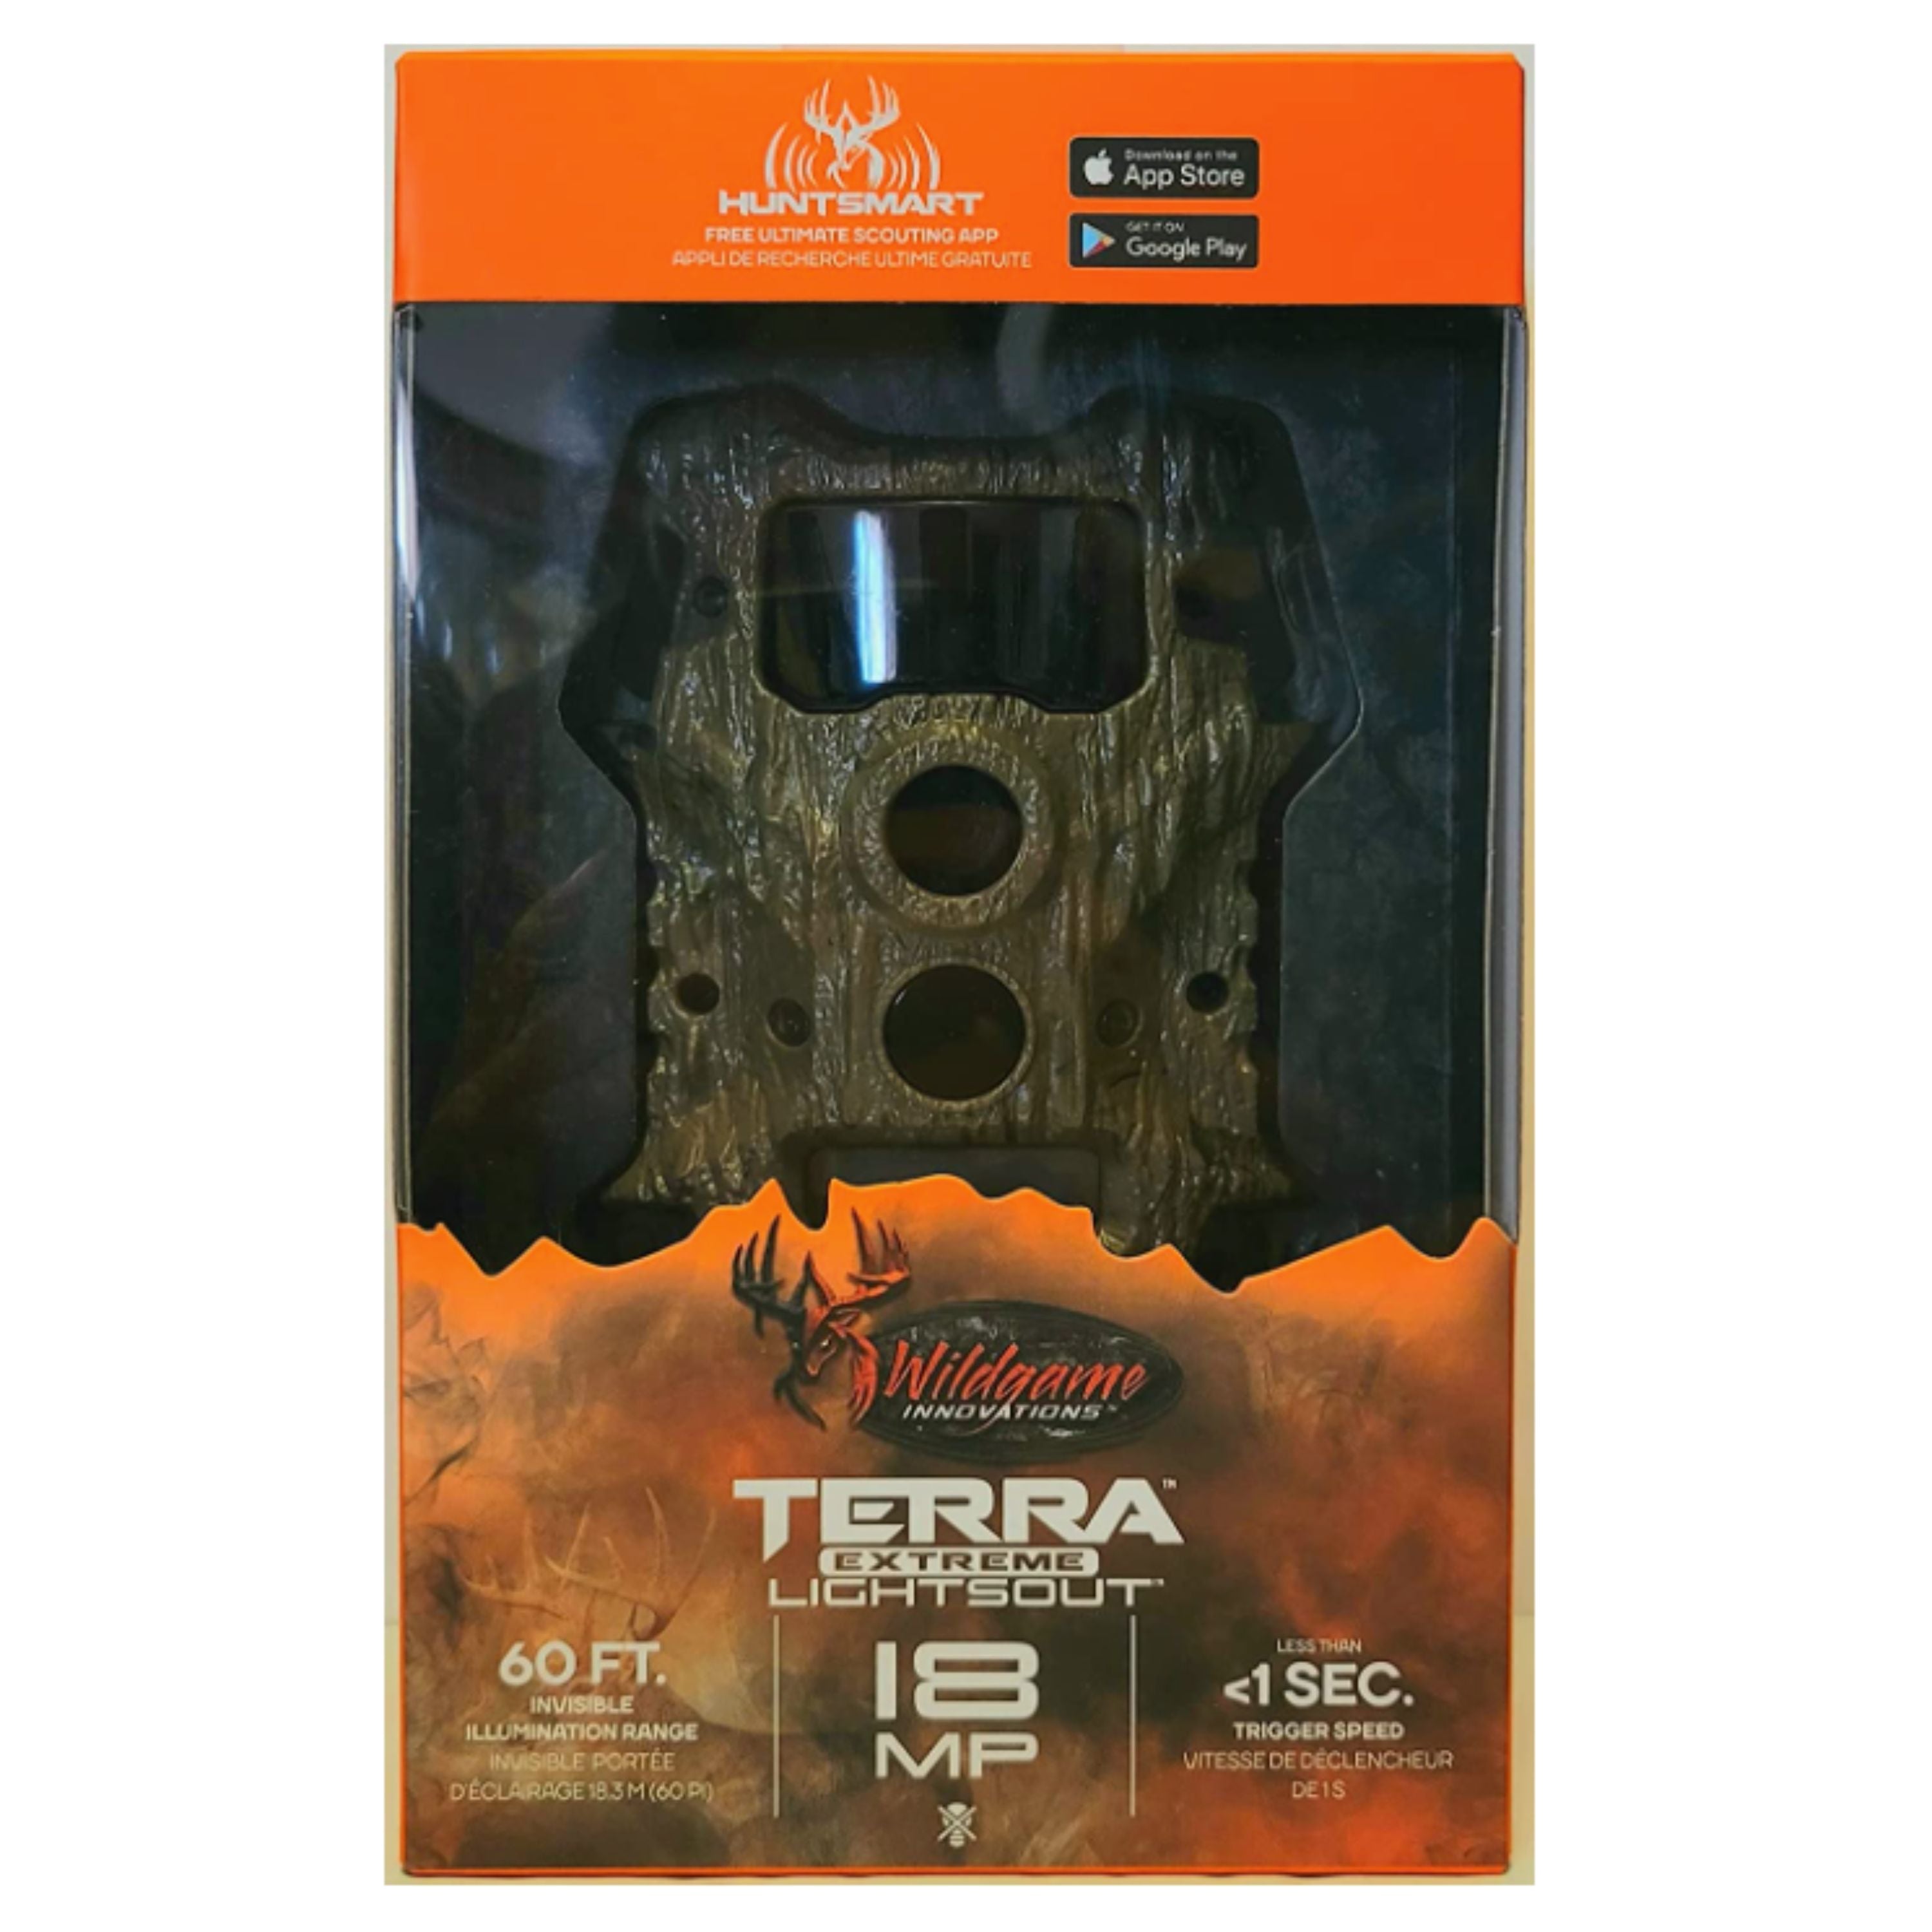 "Terra Extreme 18 Lightsout" Camera